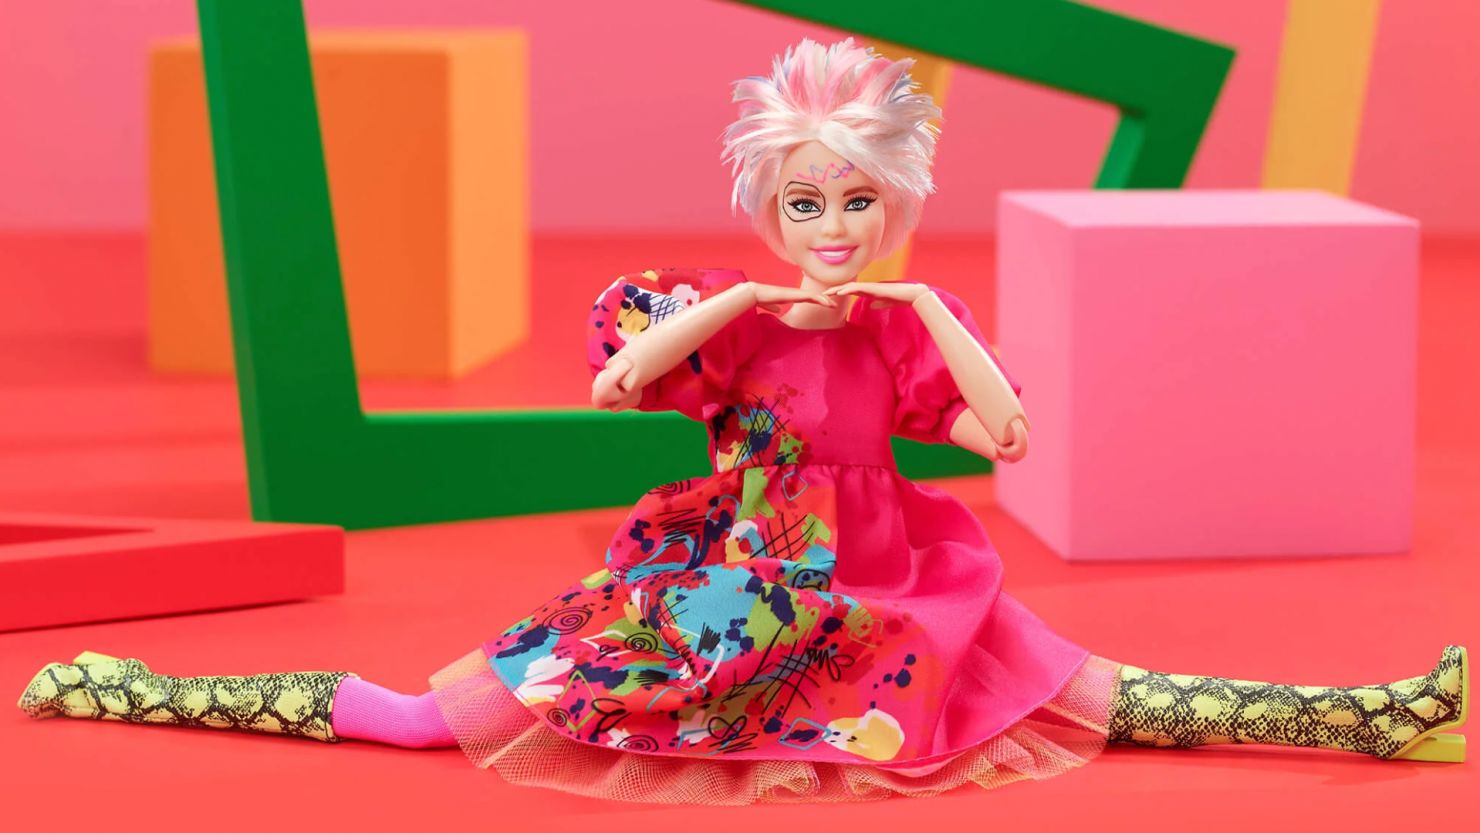 Mattel announces limited-edition ‘Weird Barbie’ doll for sale | CNN ...